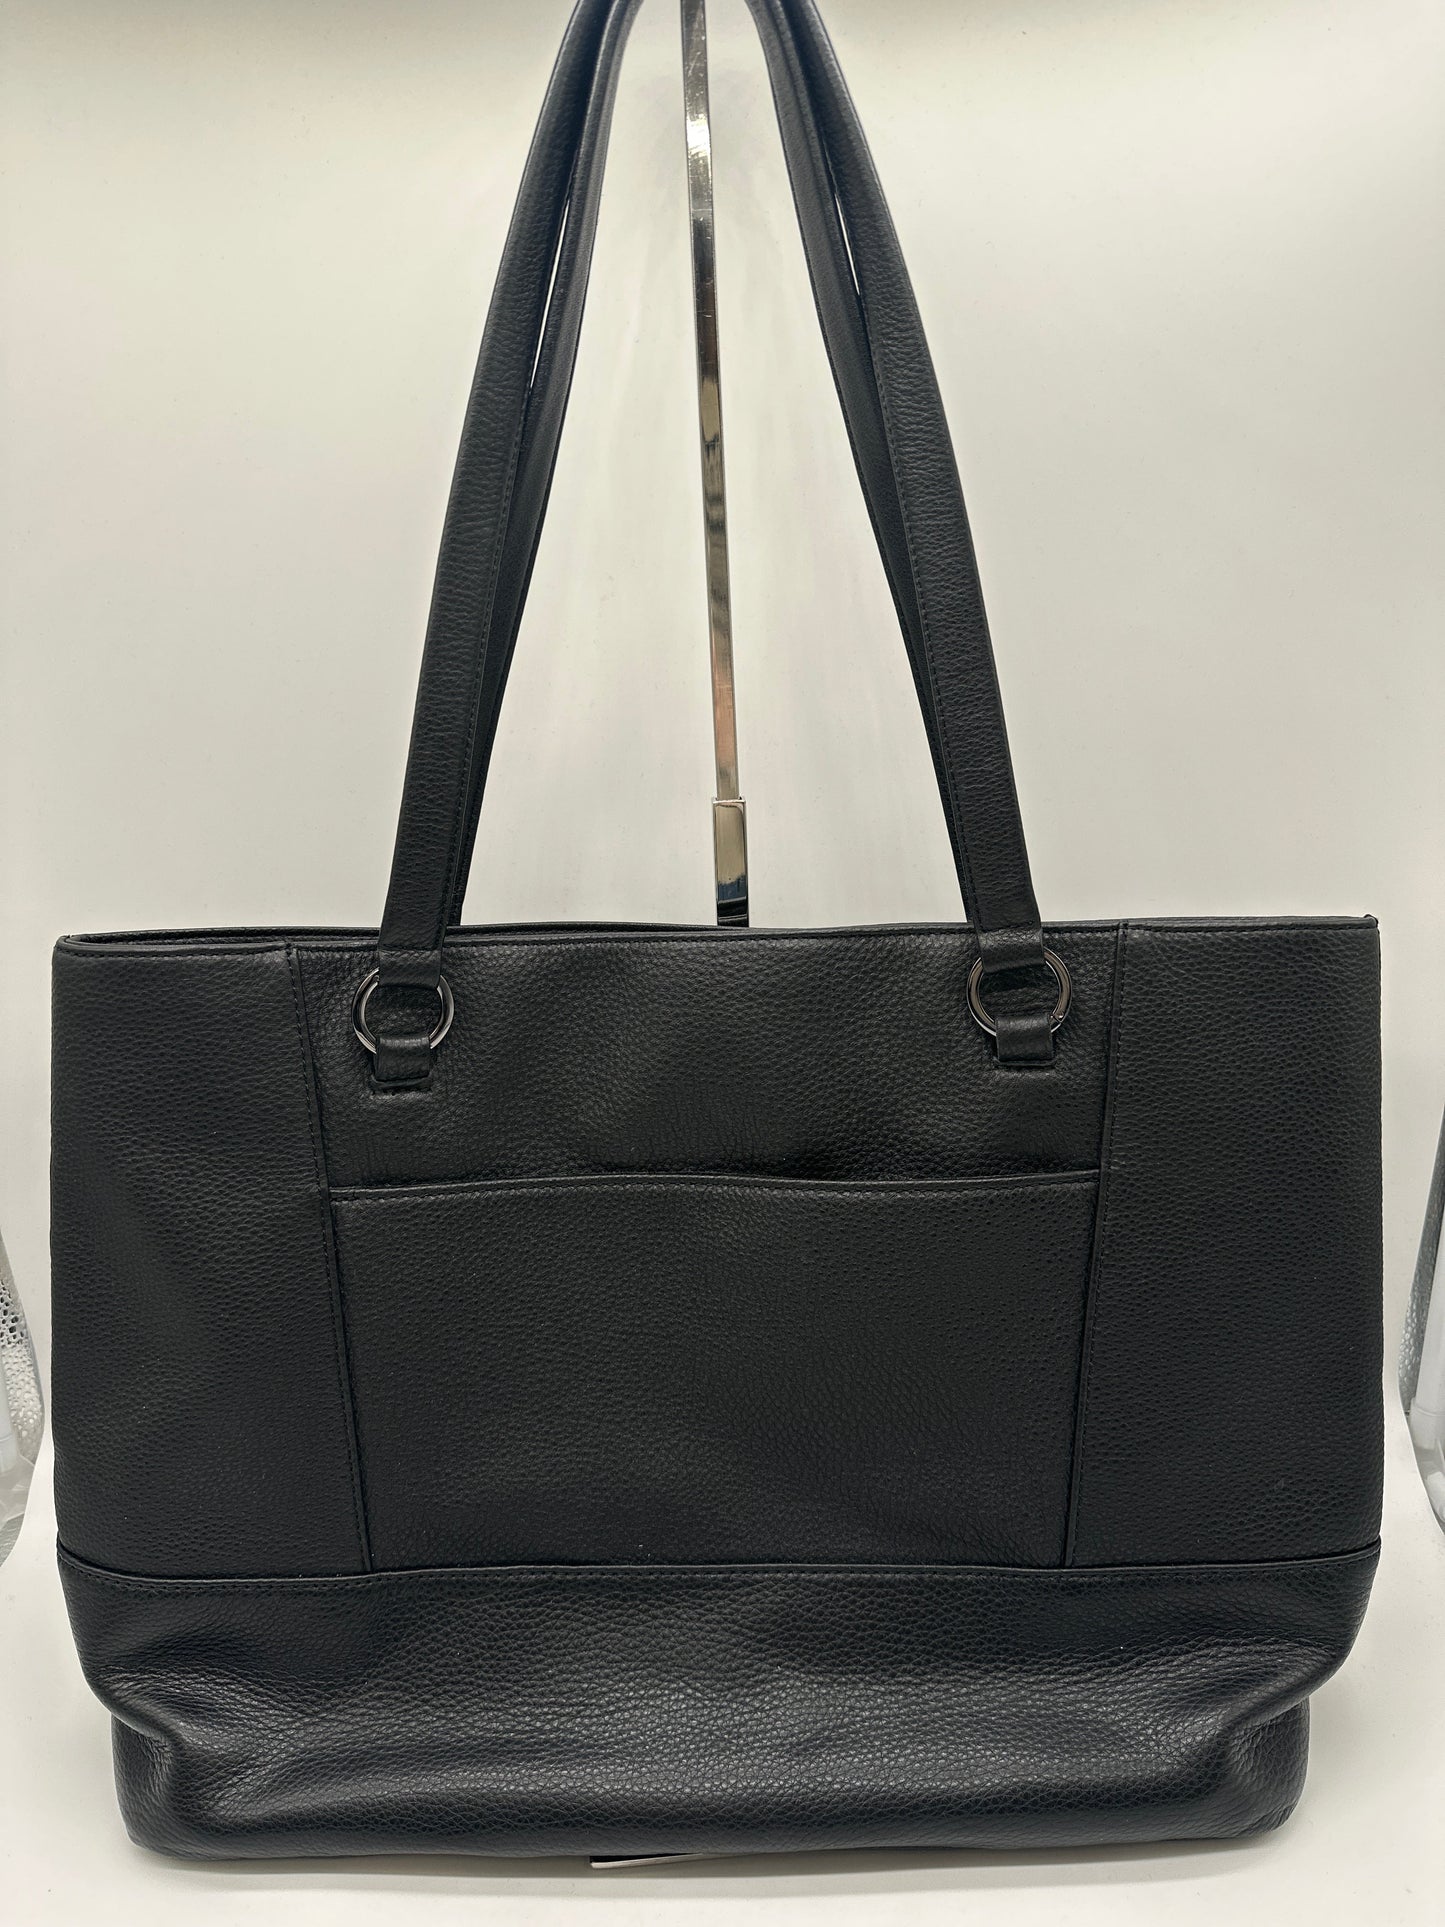 Handbag Designer By Hammitt  Size: Large